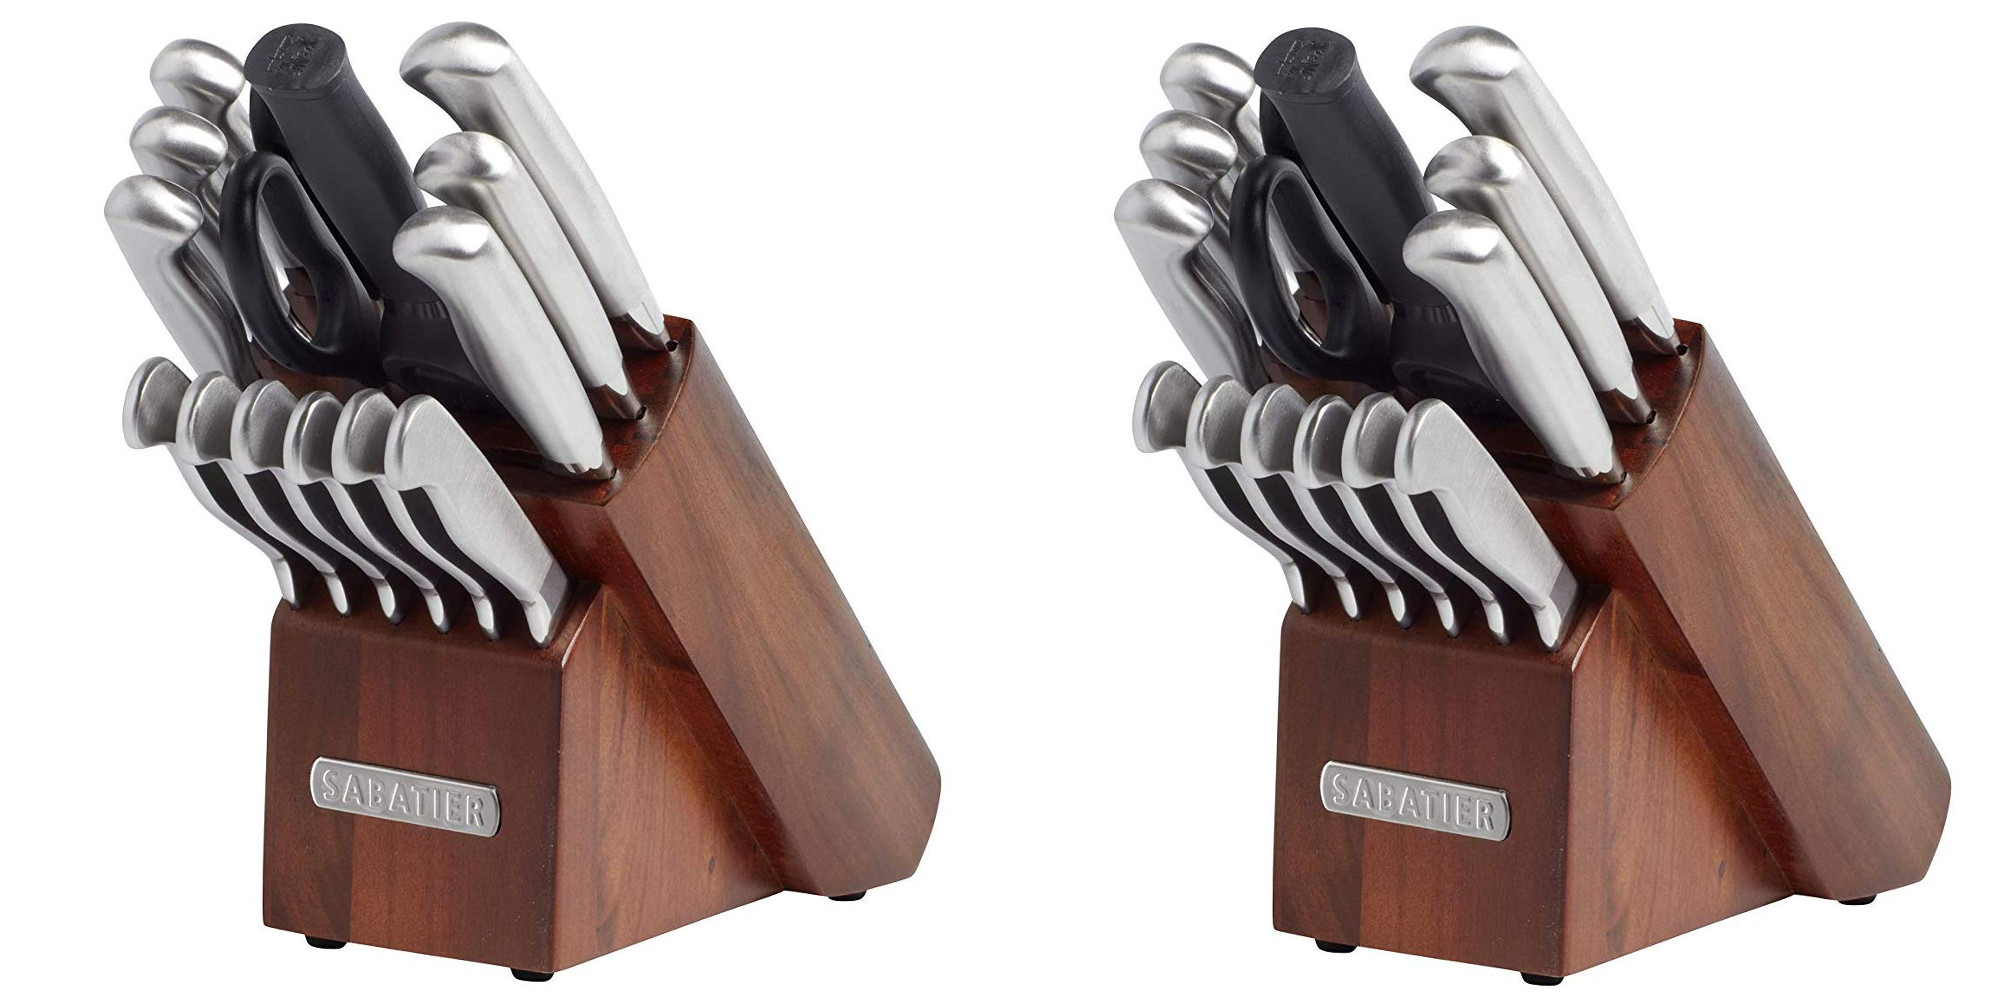 Sabatier 14-Piece Stainless Steel Hollow Handle Knife Block Set, Acacia